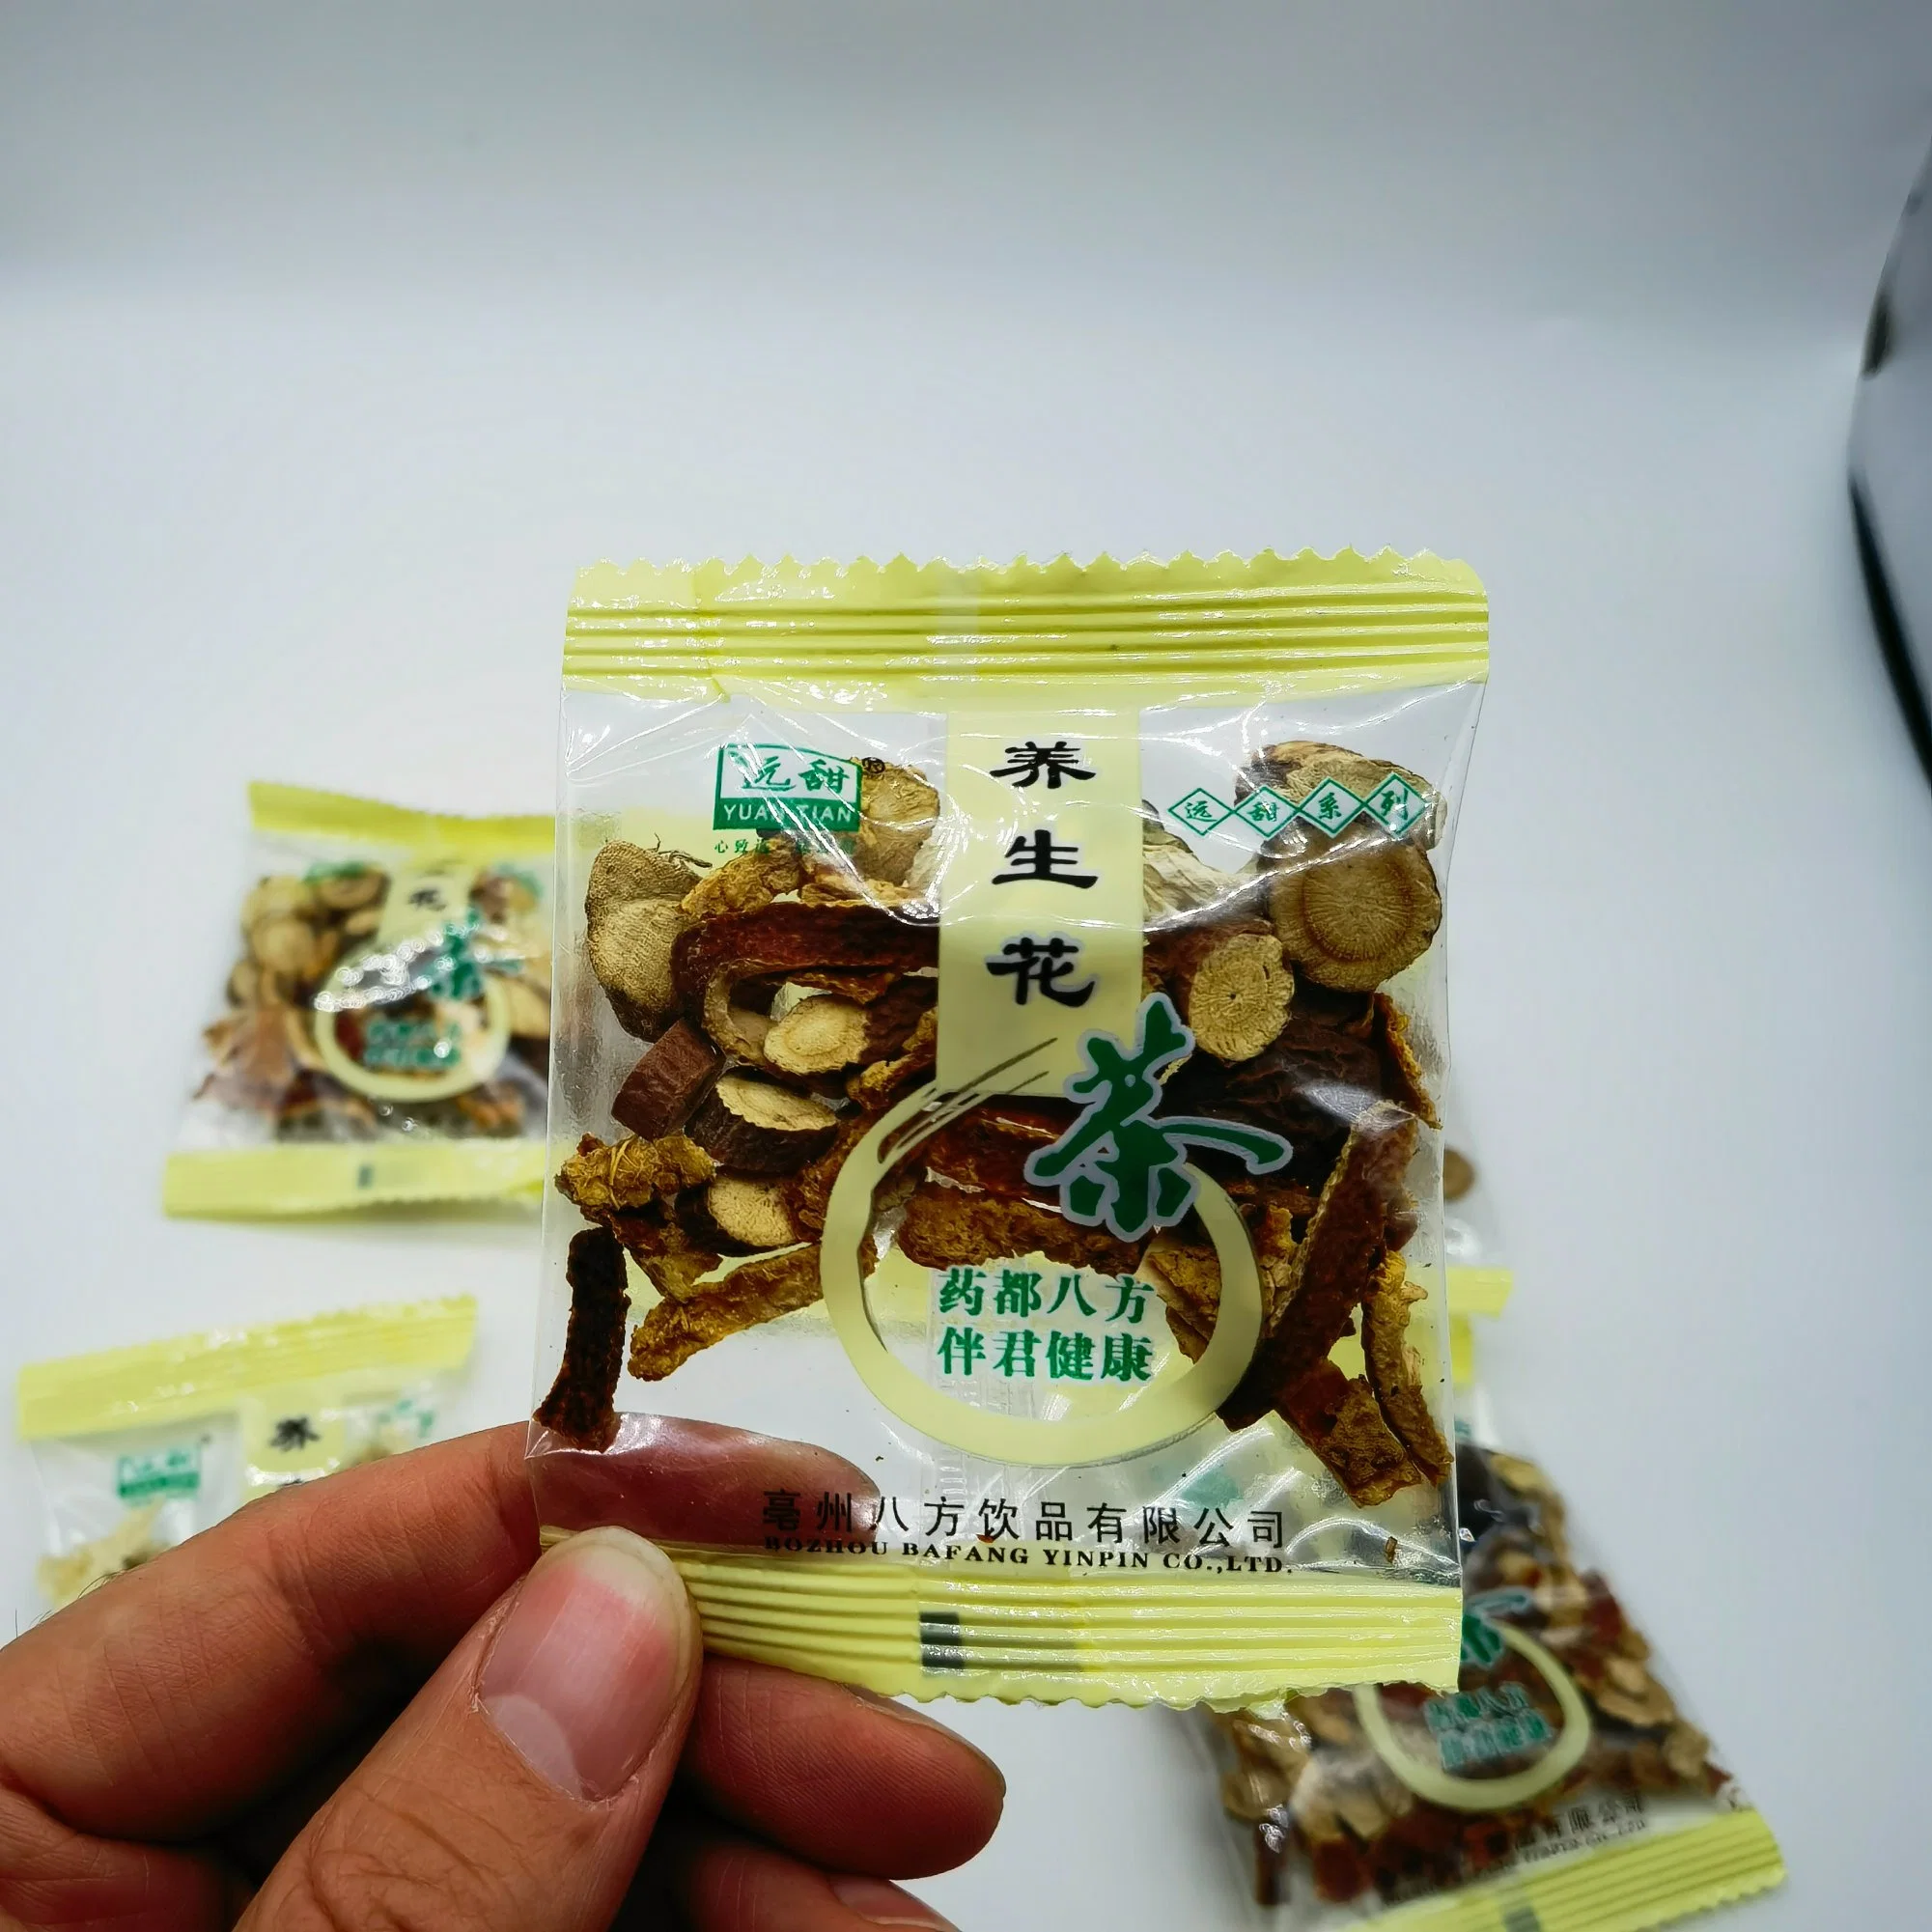 Yang Sheng Cha Gift Package Chinese Mixed Herbal Medicine Tea Bag for Health